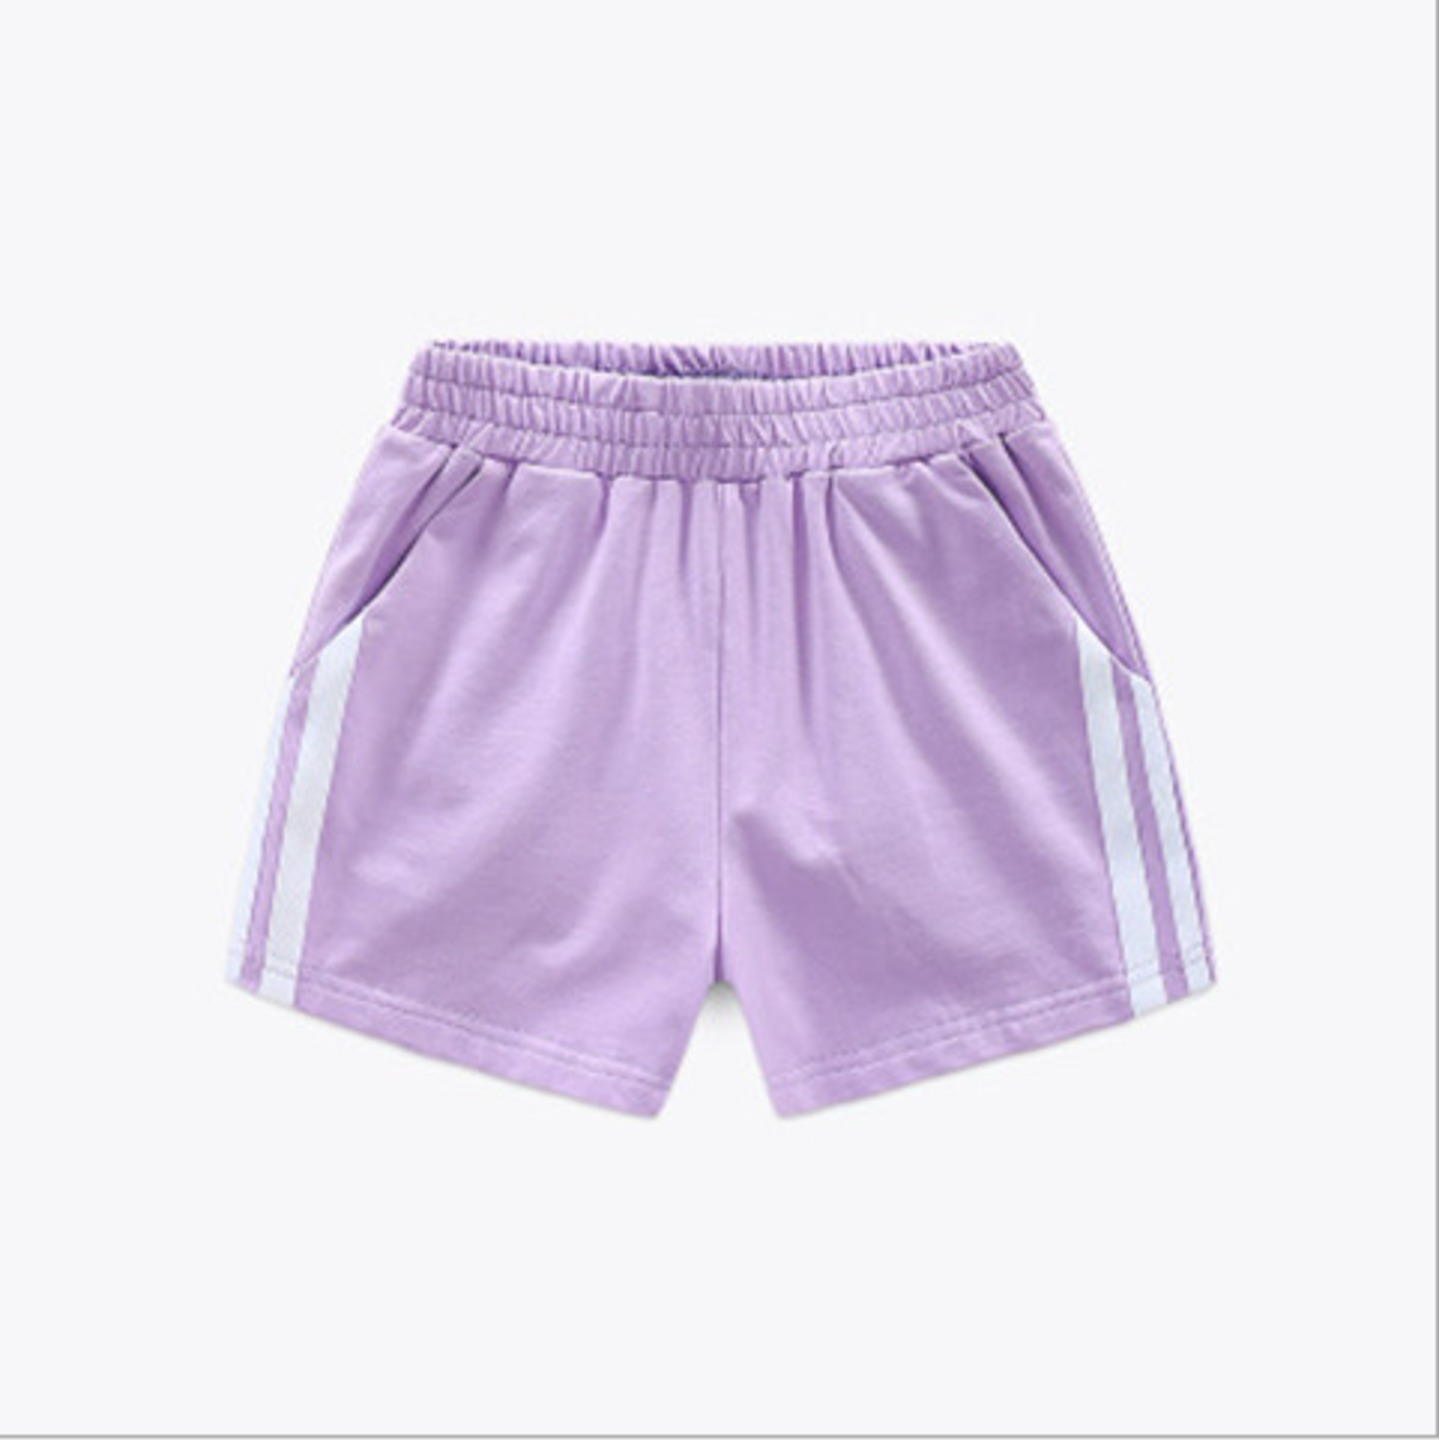 Childrens Cotton Sports Shorts Purple